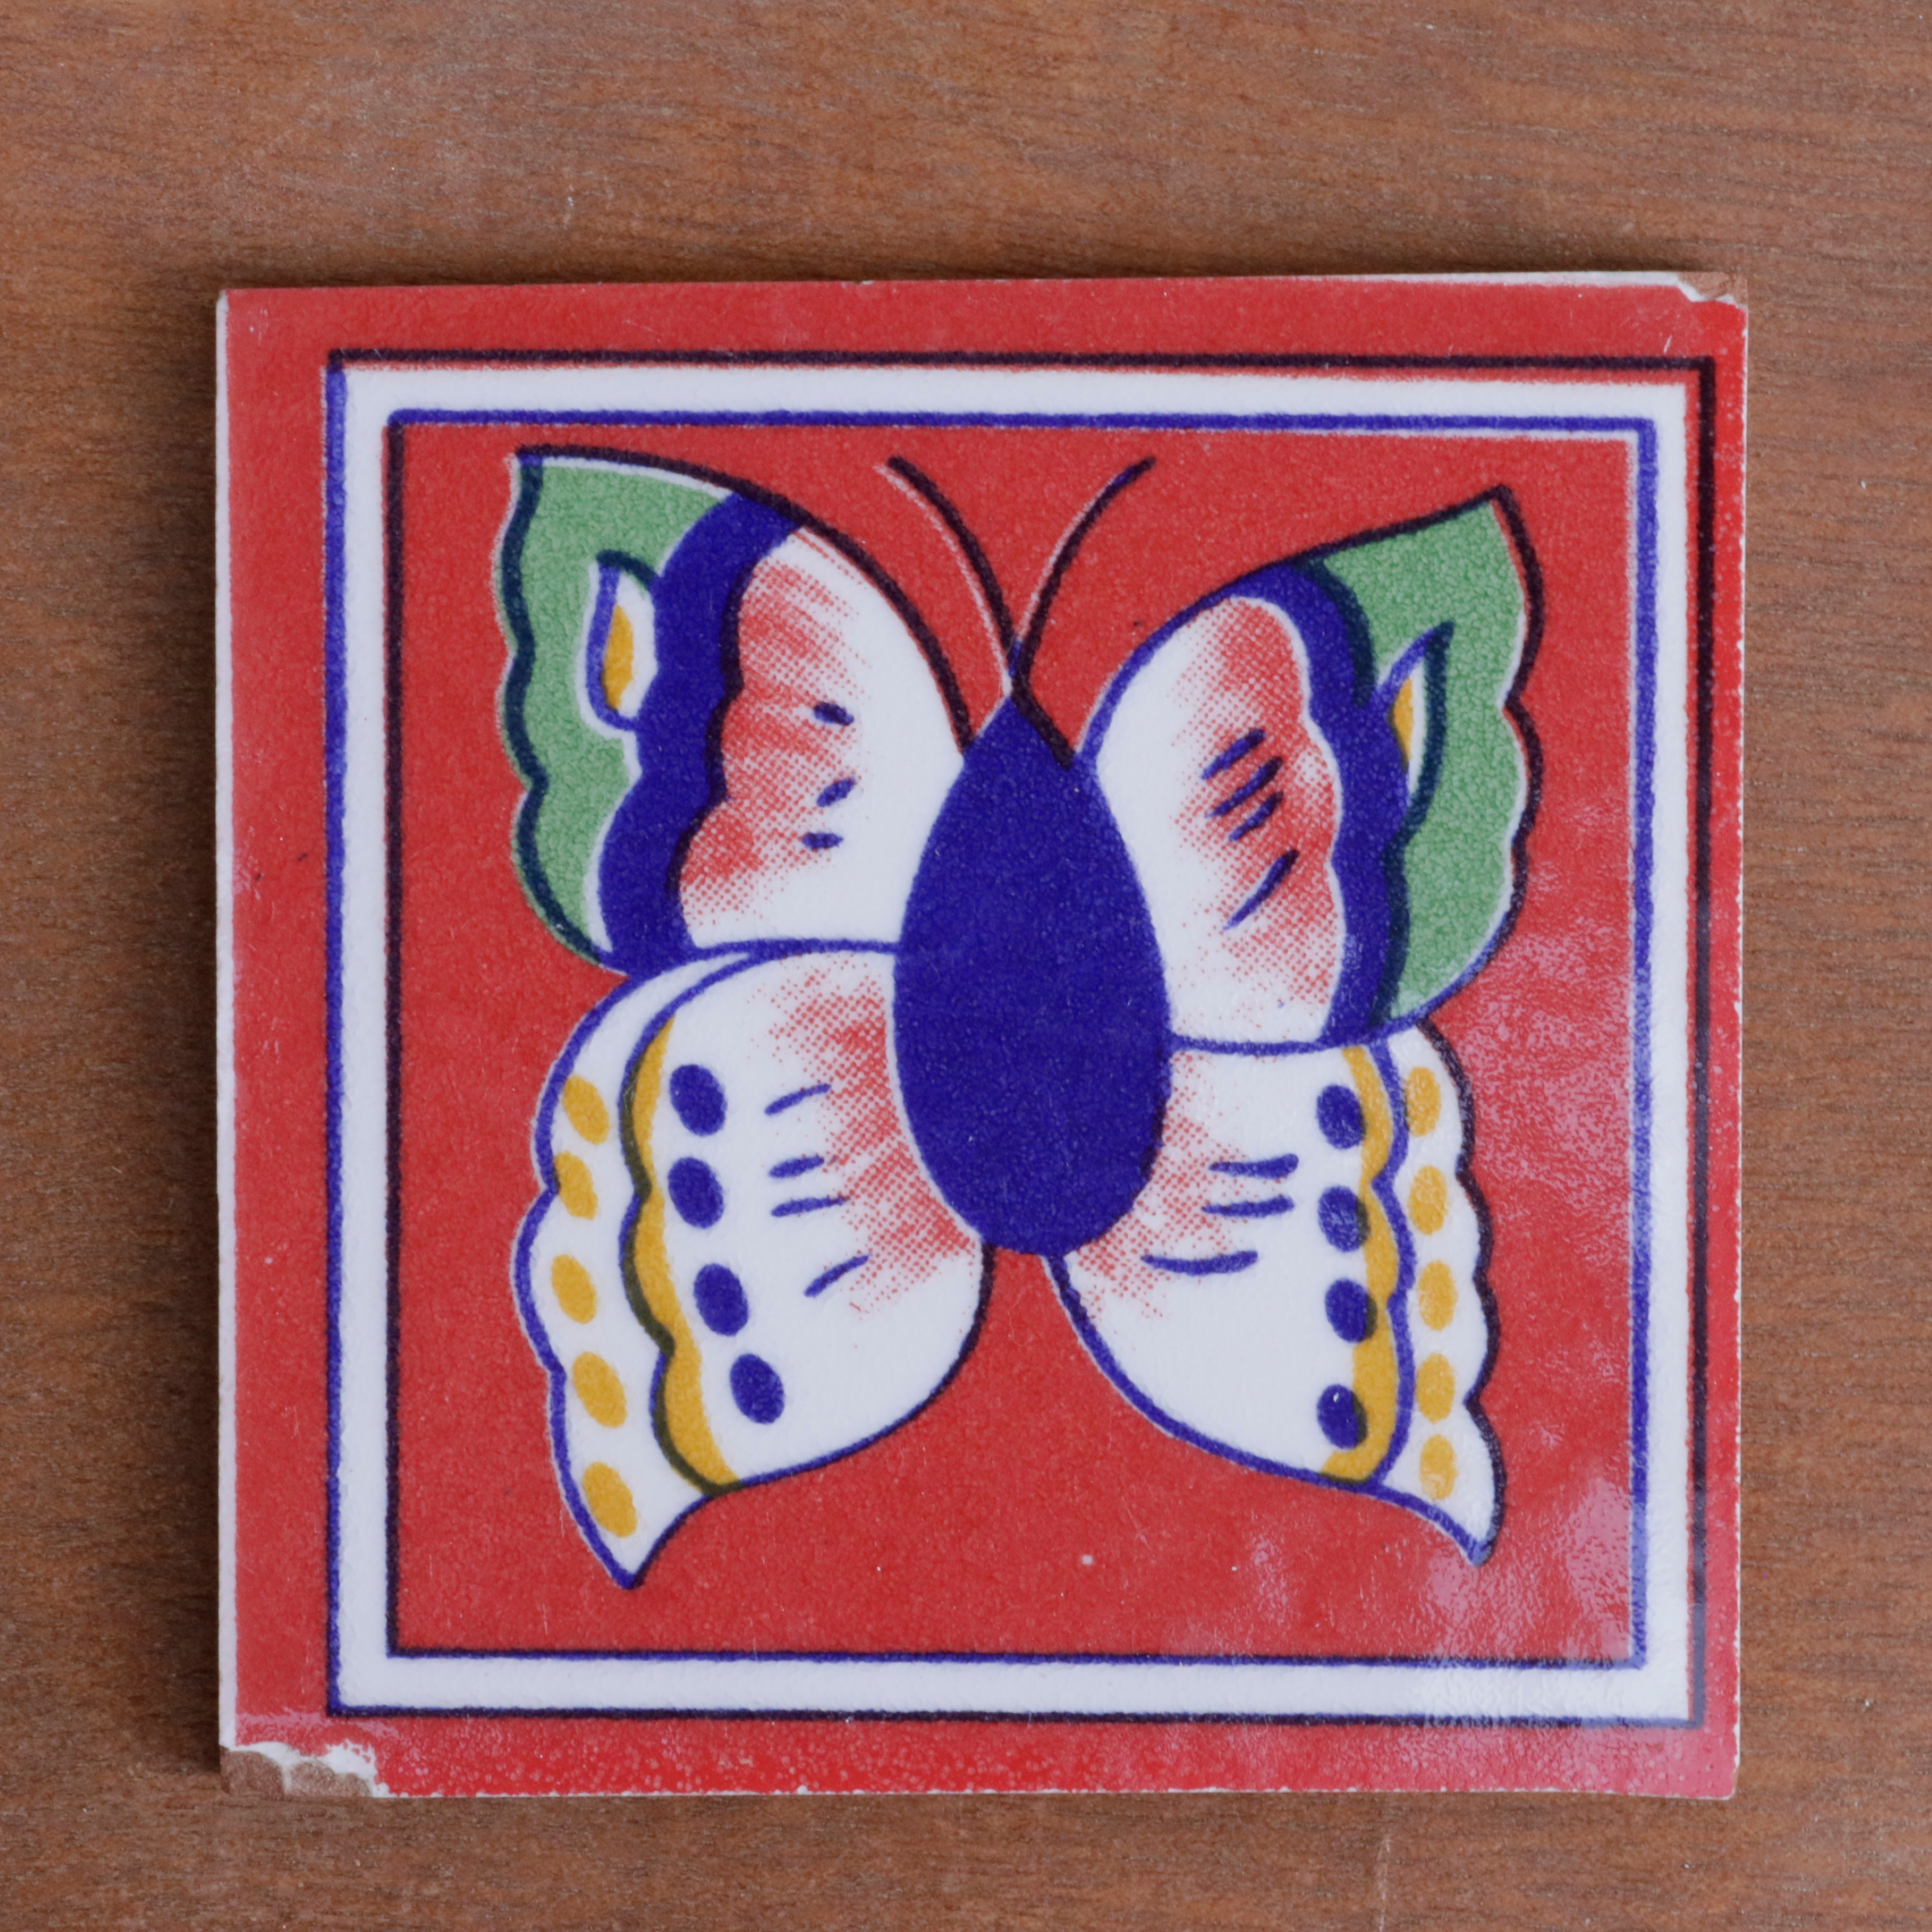 Vintage Peach Butterfly Designed Square Ceramic Tile Set of 2 Ceramic Tile